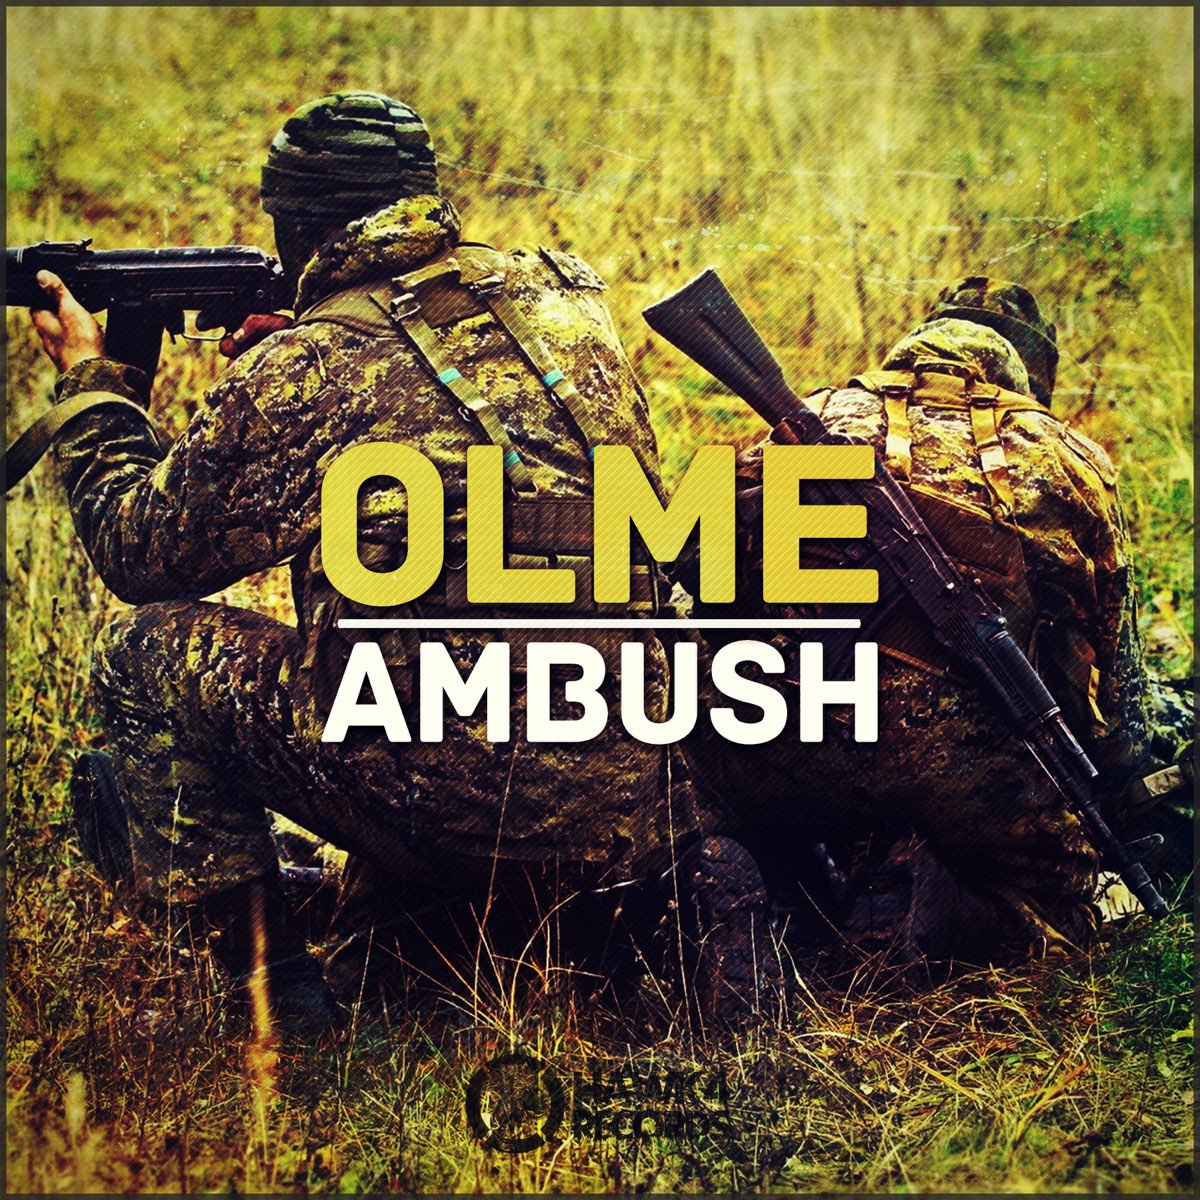 Ambush Buzzworl. Olme. Doors Ambush Music. Ambush’s Original Design..